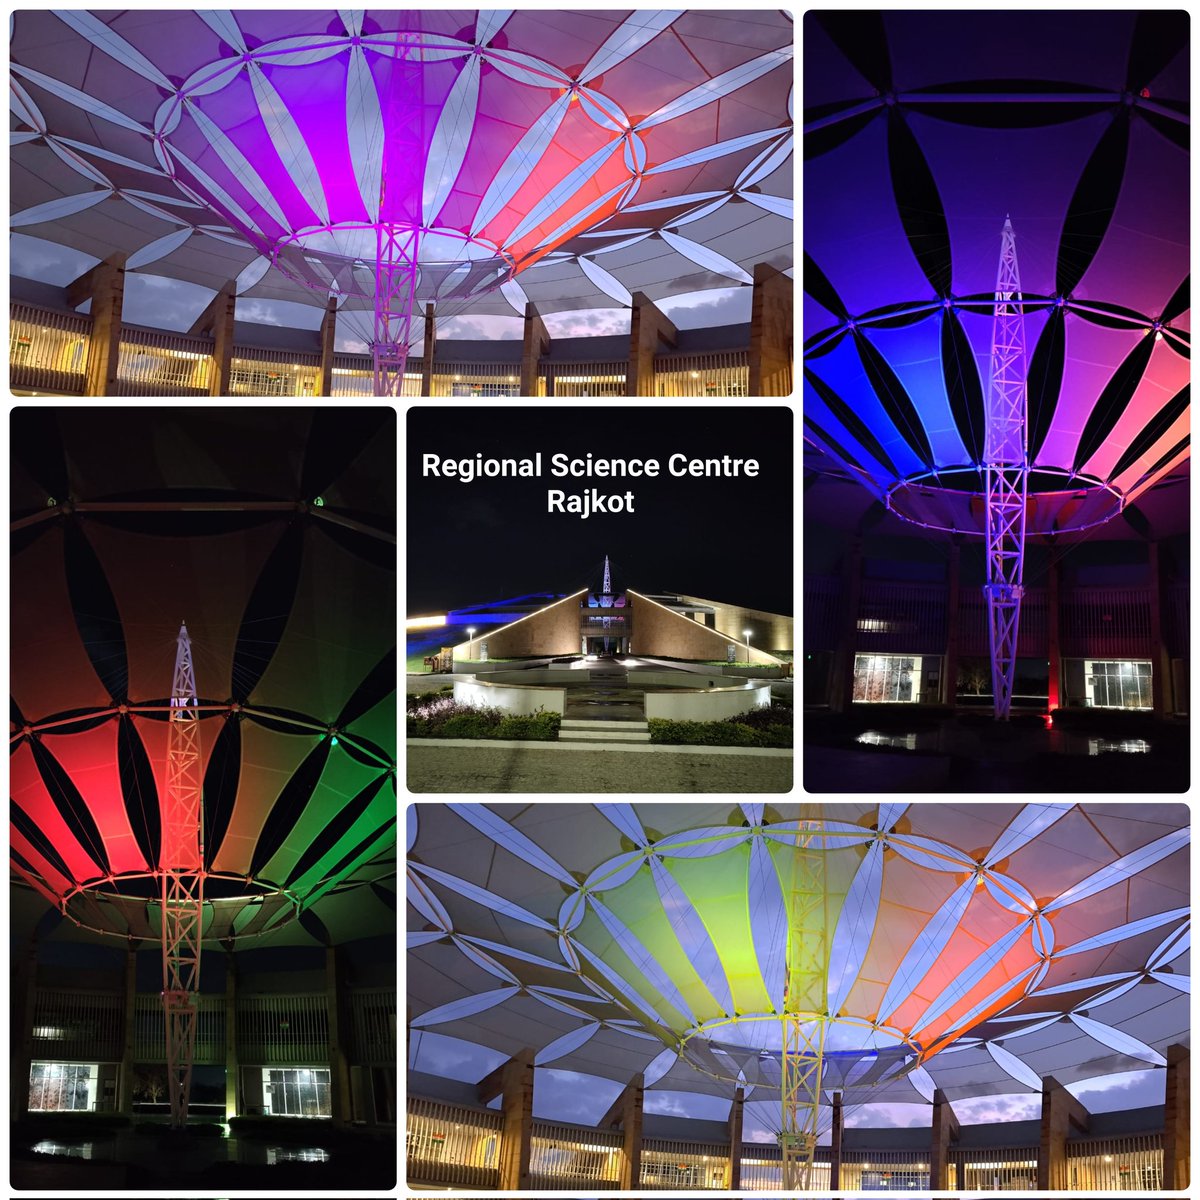 The colourful lights & decorations on this #GujaratDay at the unique structural design of Regional Science Centre, #Rajkot reflects the #beauty, #creativity, & #festive spirit of our #Gujarat.
જય જય ગરવી ગુજરાત!
@vnehra @narottamsahoo @dstGujarat @CMOGuj @InfoGujcost @InfoGujarat